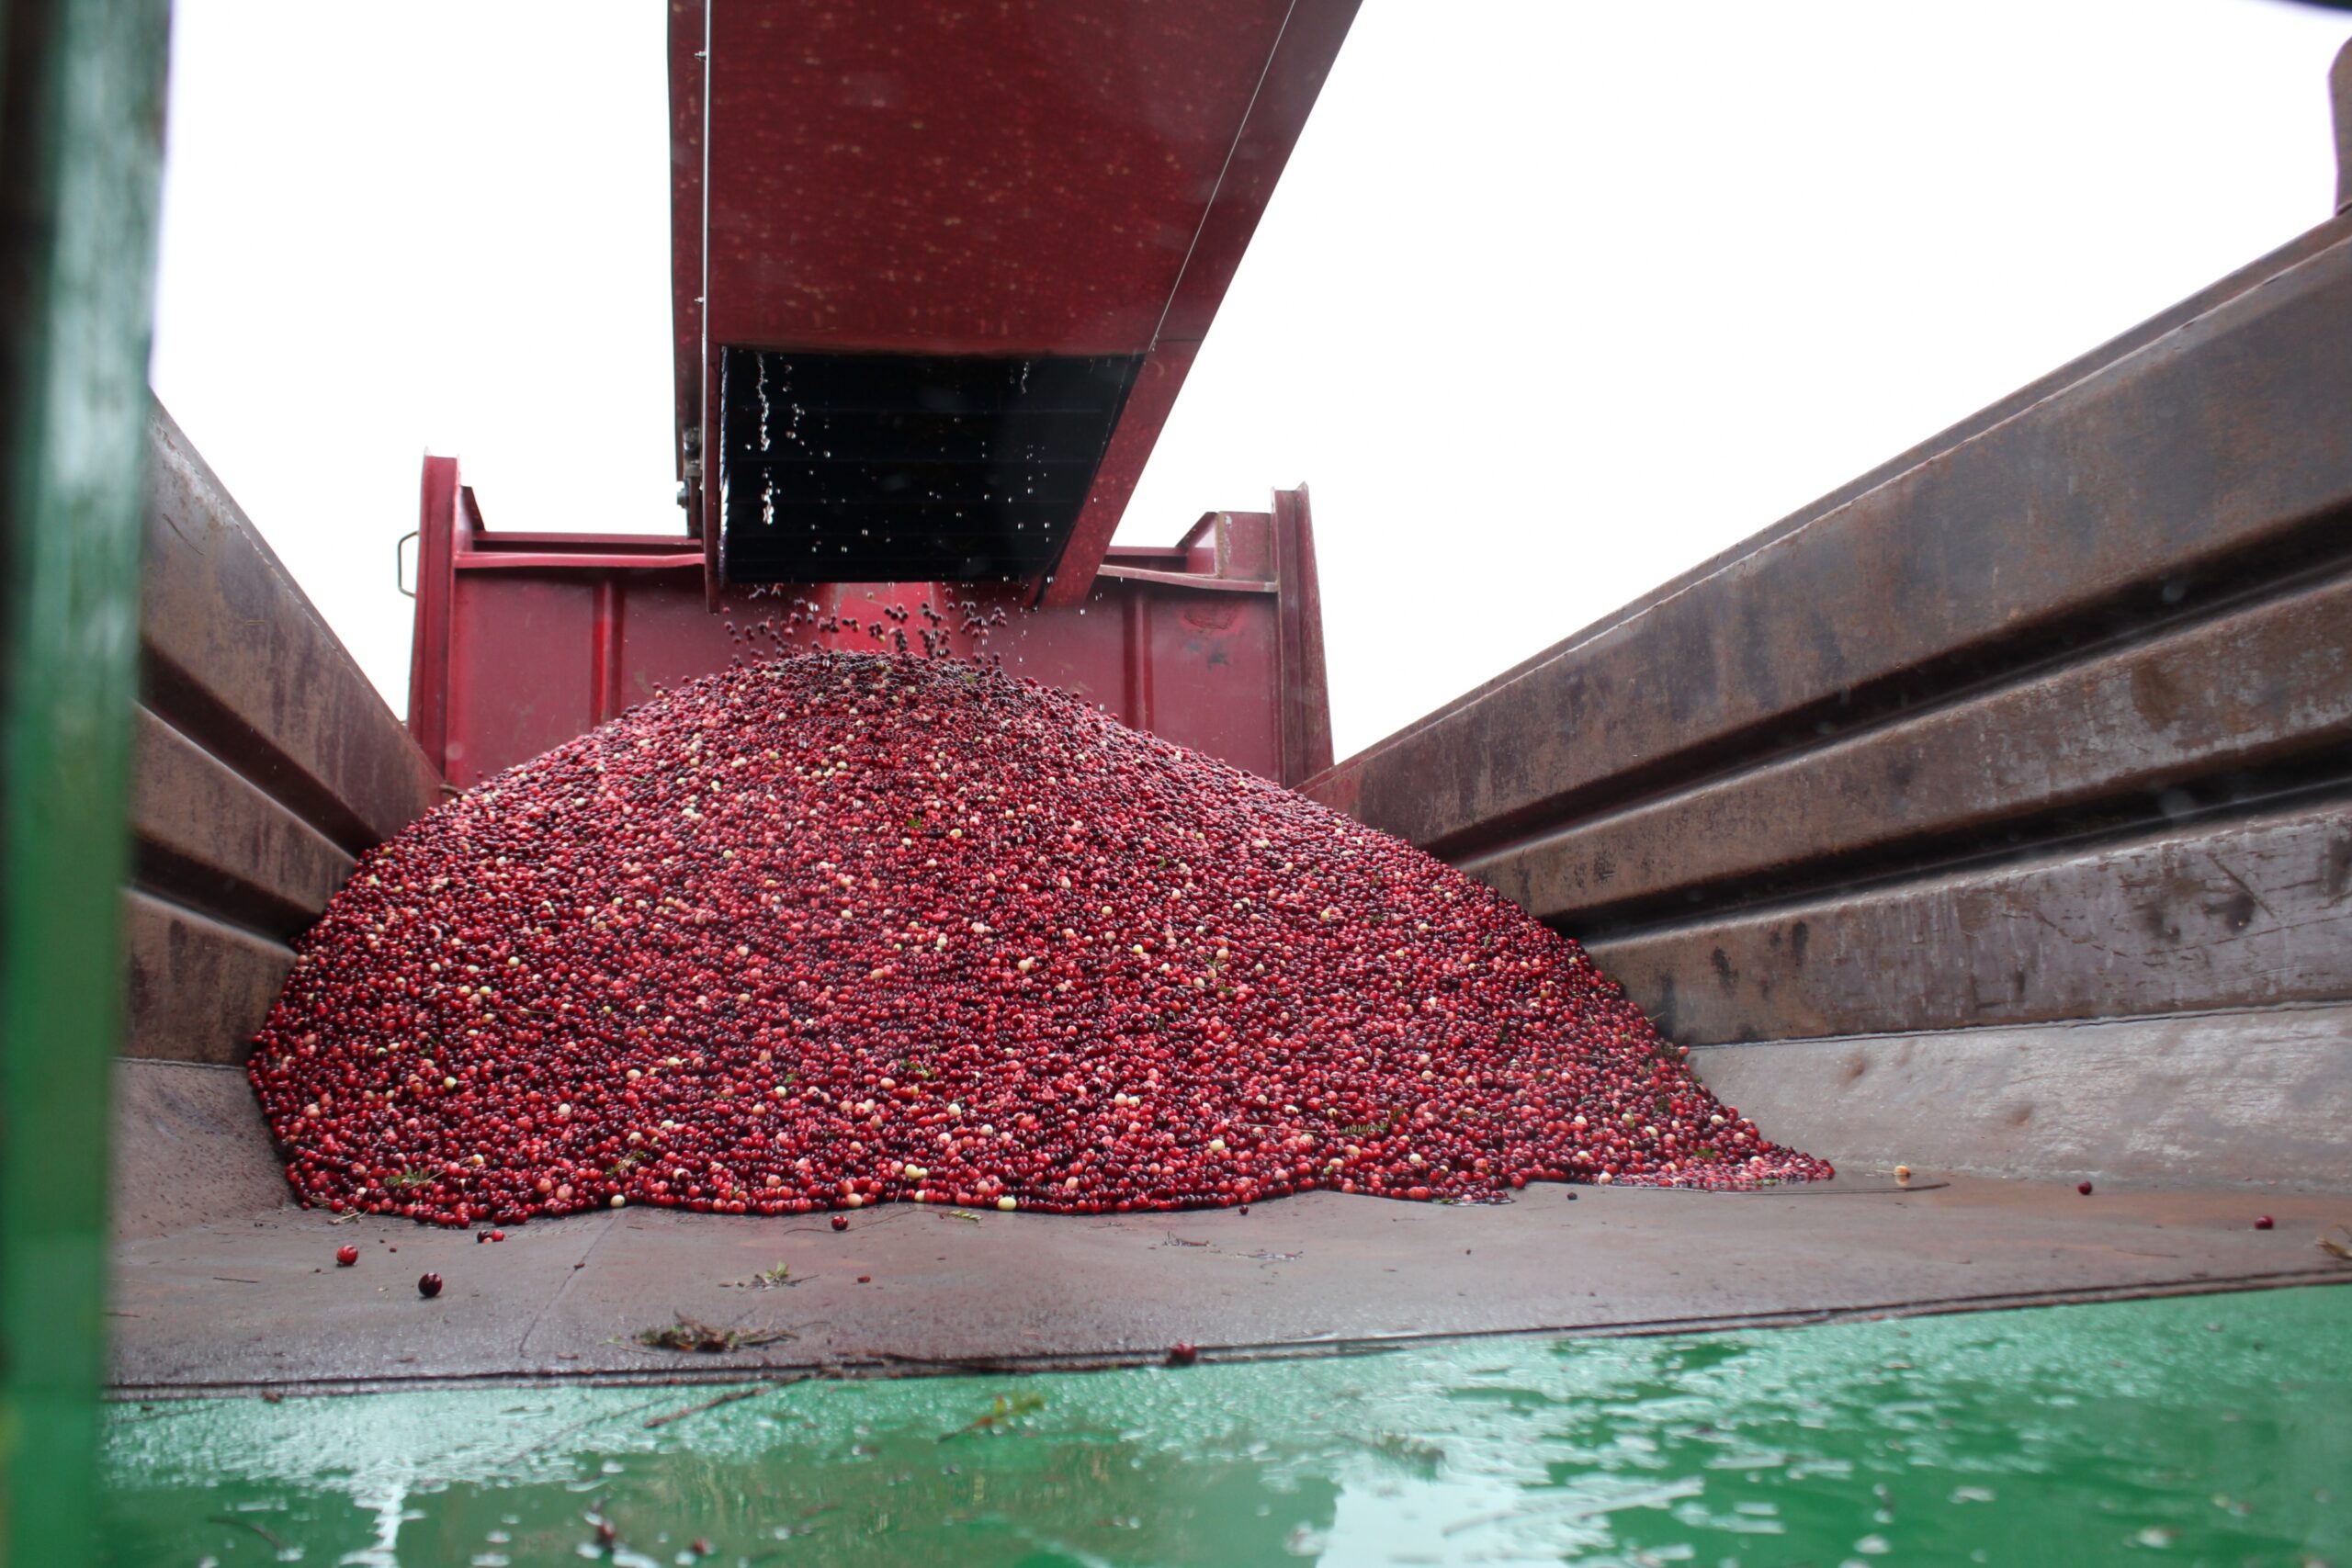 A dump truck fills with cranberries